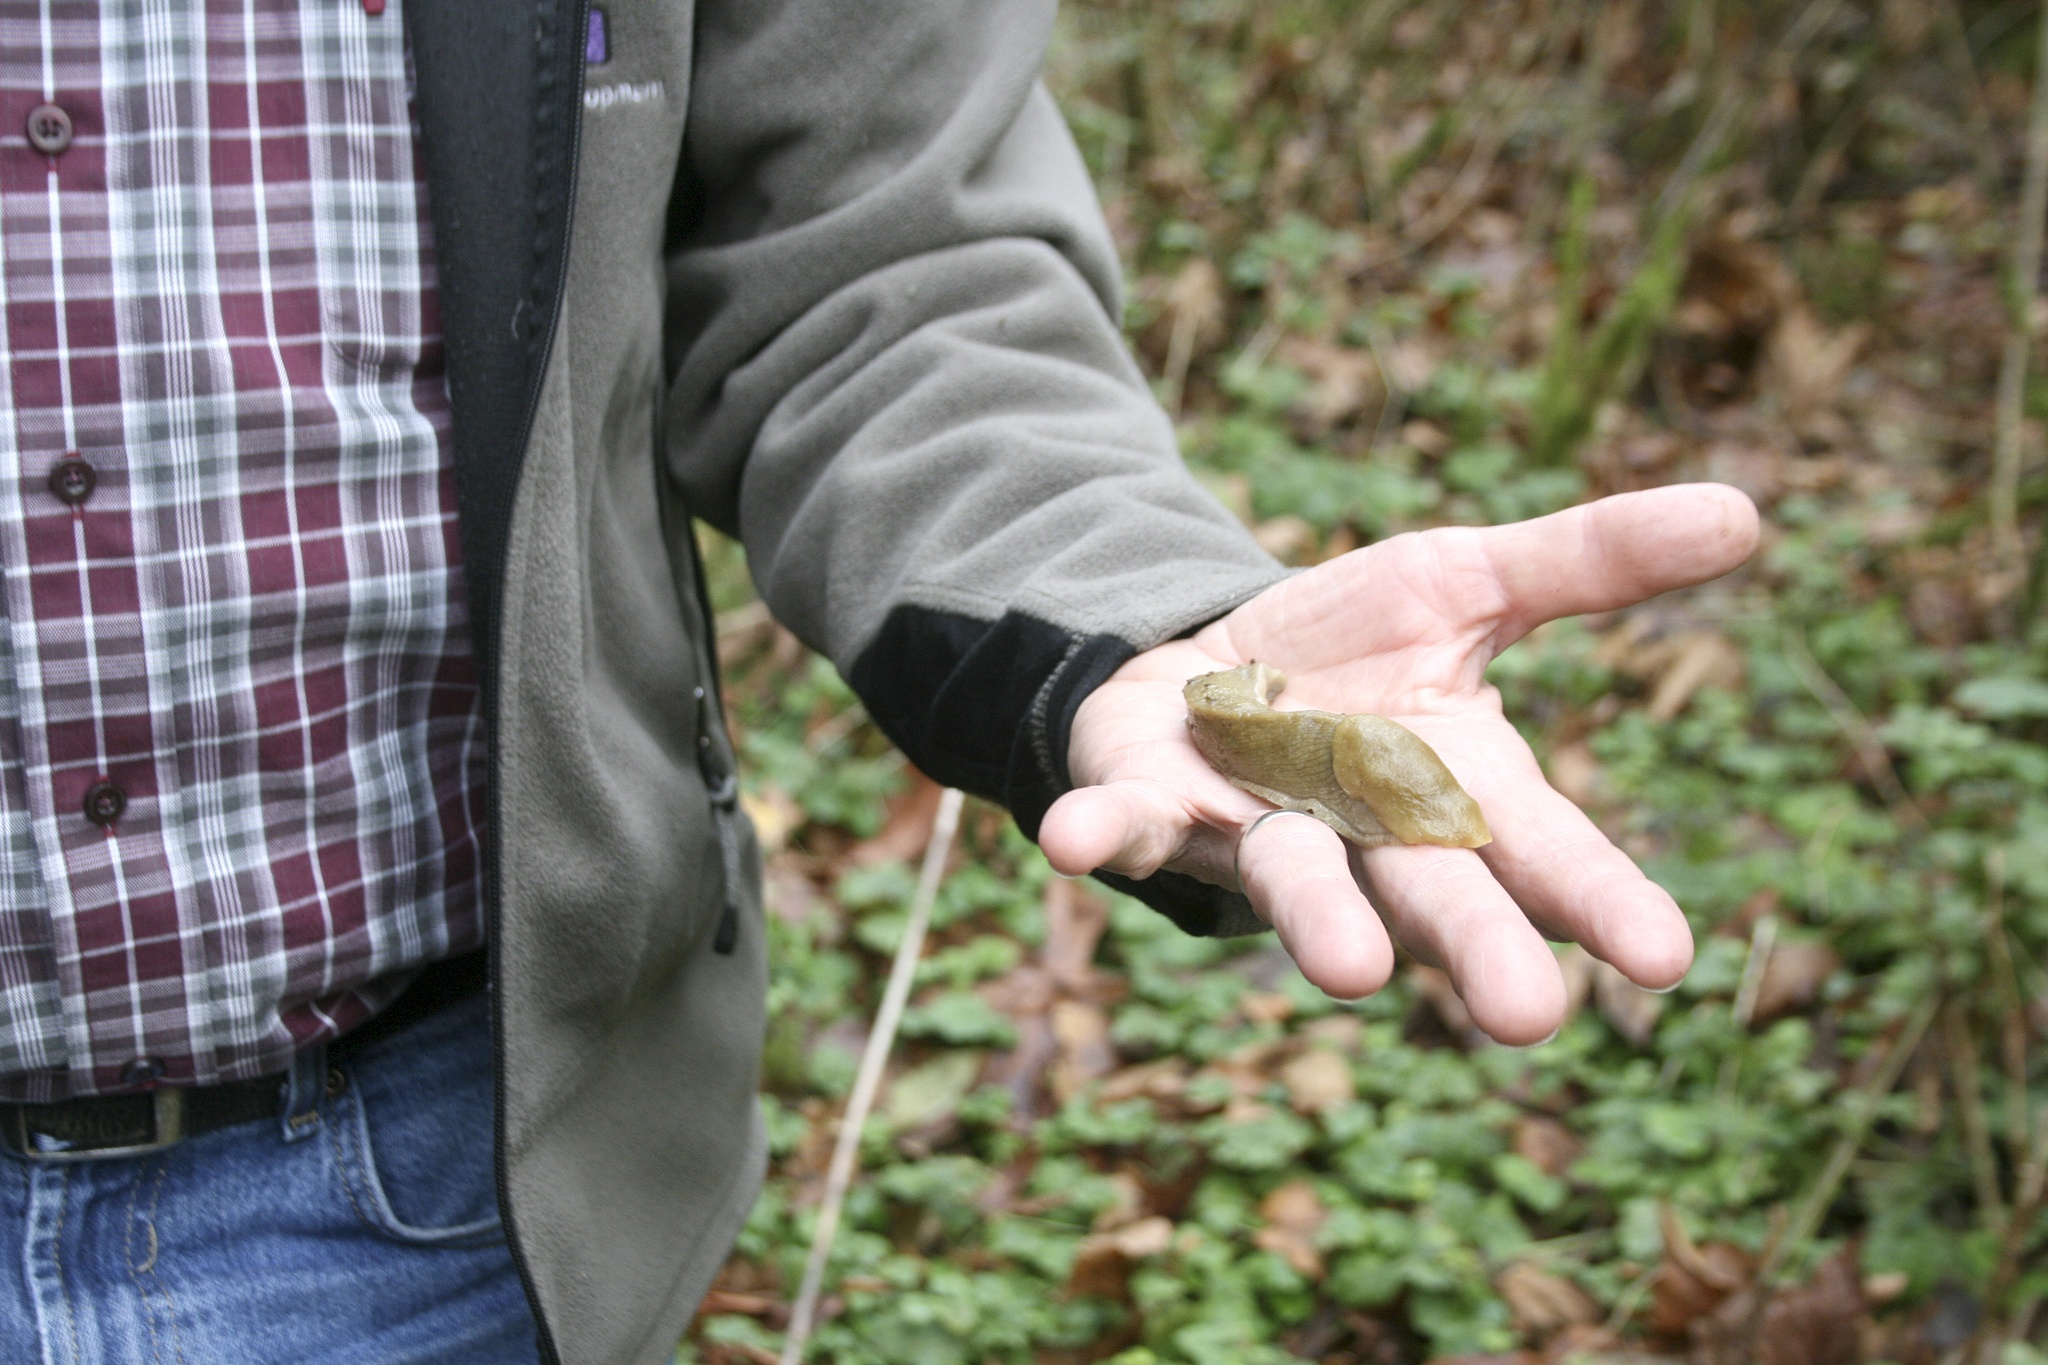 Shelton View Forest Stewardship Association (SVFSA) board member Bob Rorabaugh holds a slug in the forest. CATHERINE KRUMMEY / Bothell Reporter